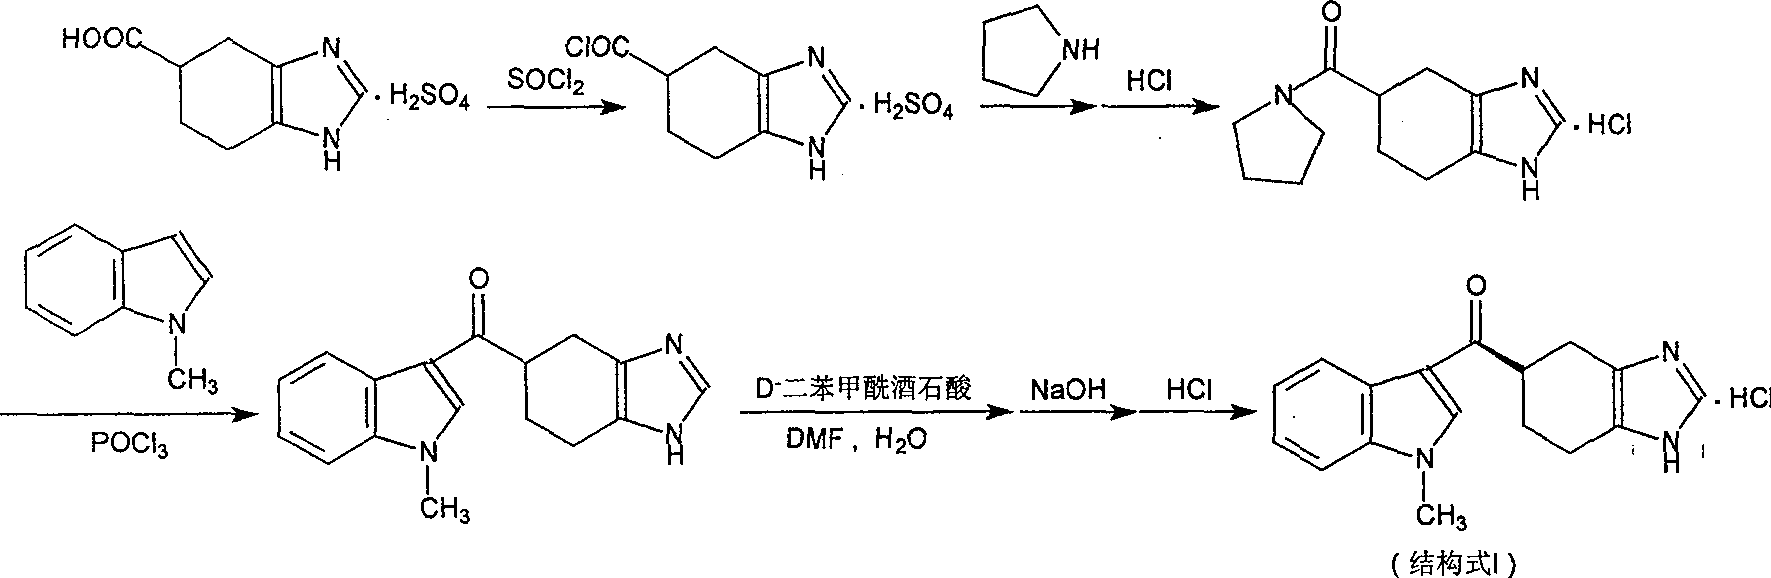 Novel preparation method of ramosetron hydrochloride